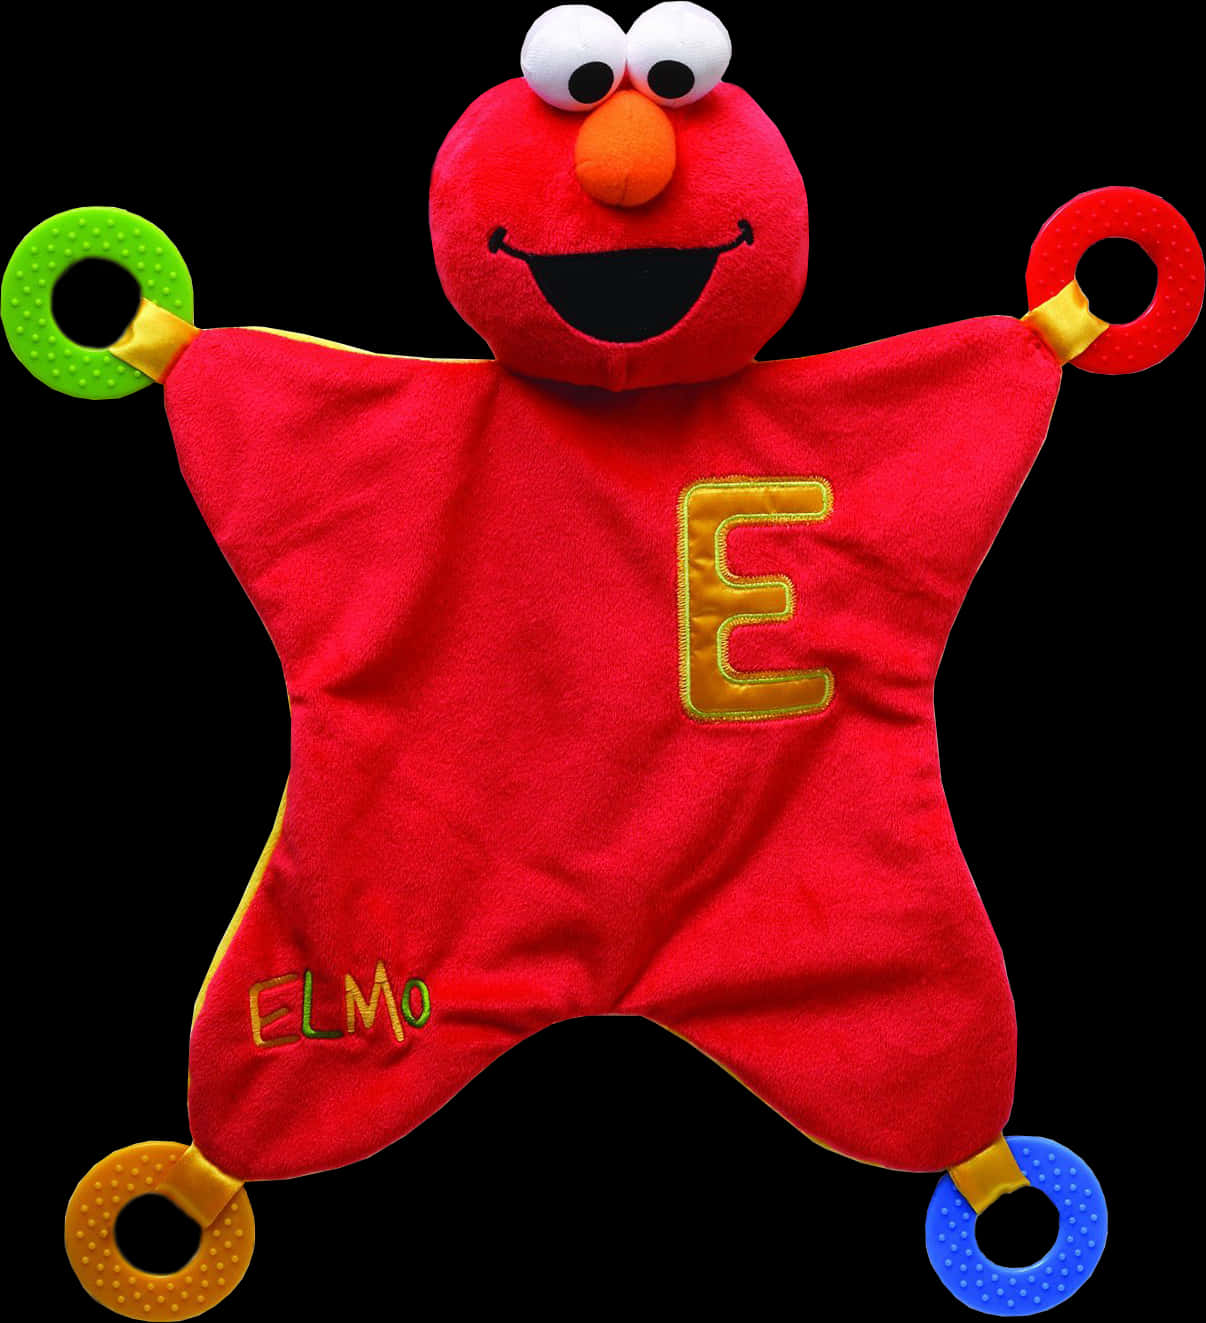 Elmo Plush Blanket Toy PNG image